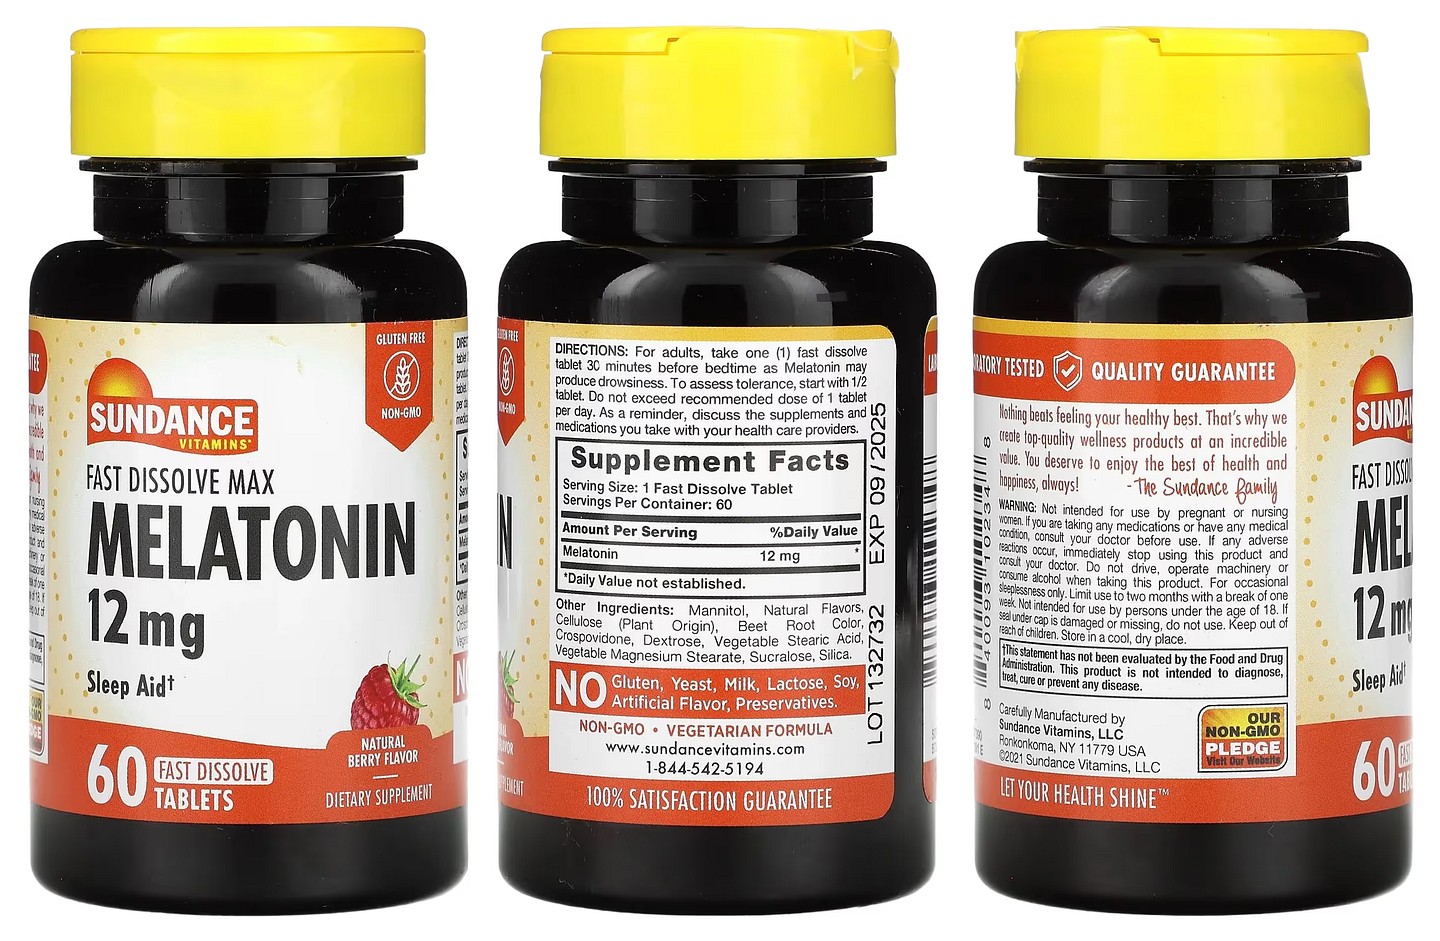 Sundance Vitamins, Fast Dissolve Max Melatonin packaging